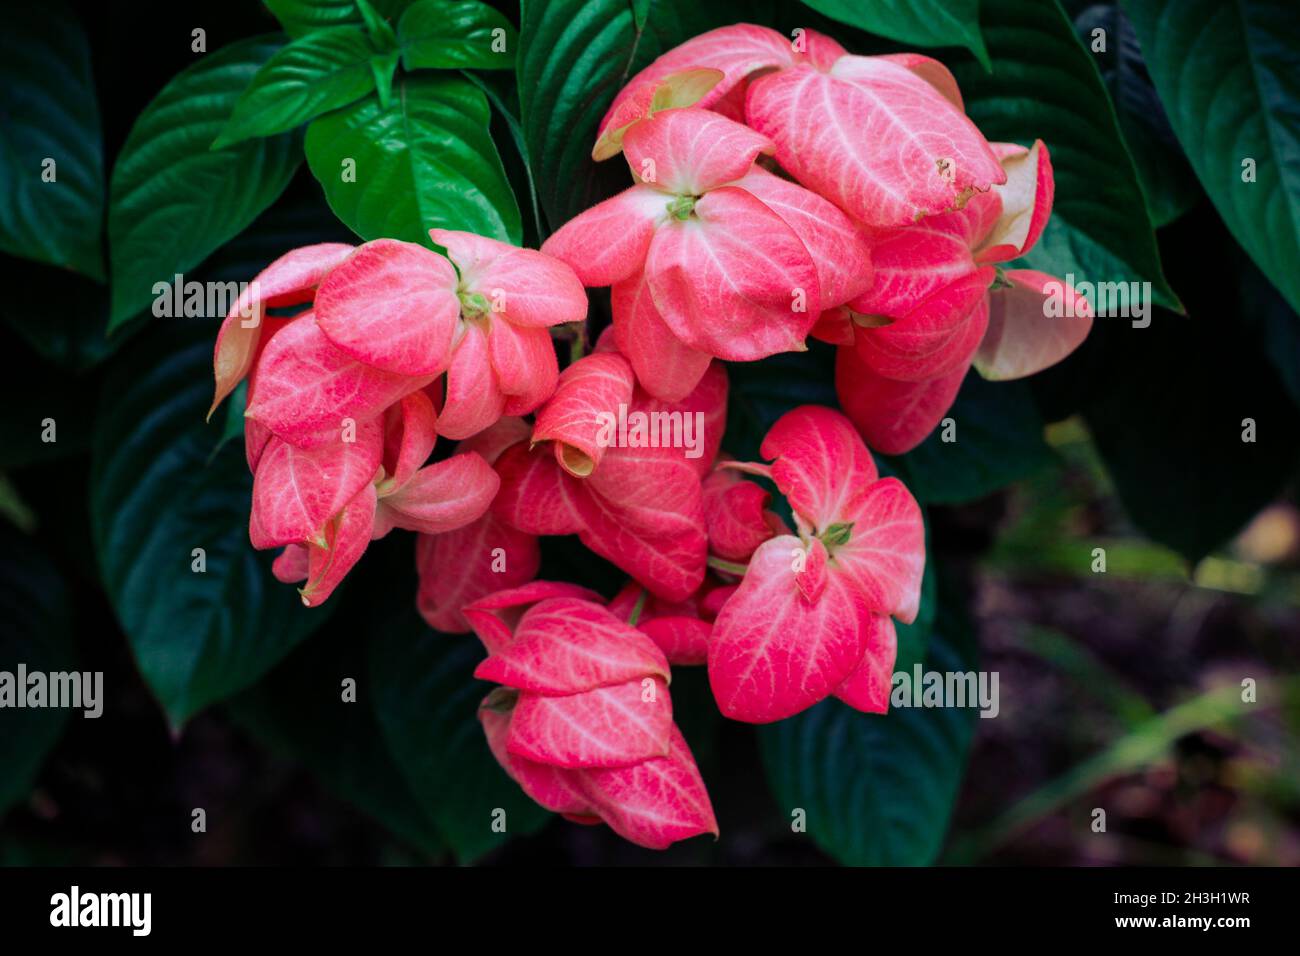 Closeup shot of blooming pink Mussaenda flowers Stock Photo